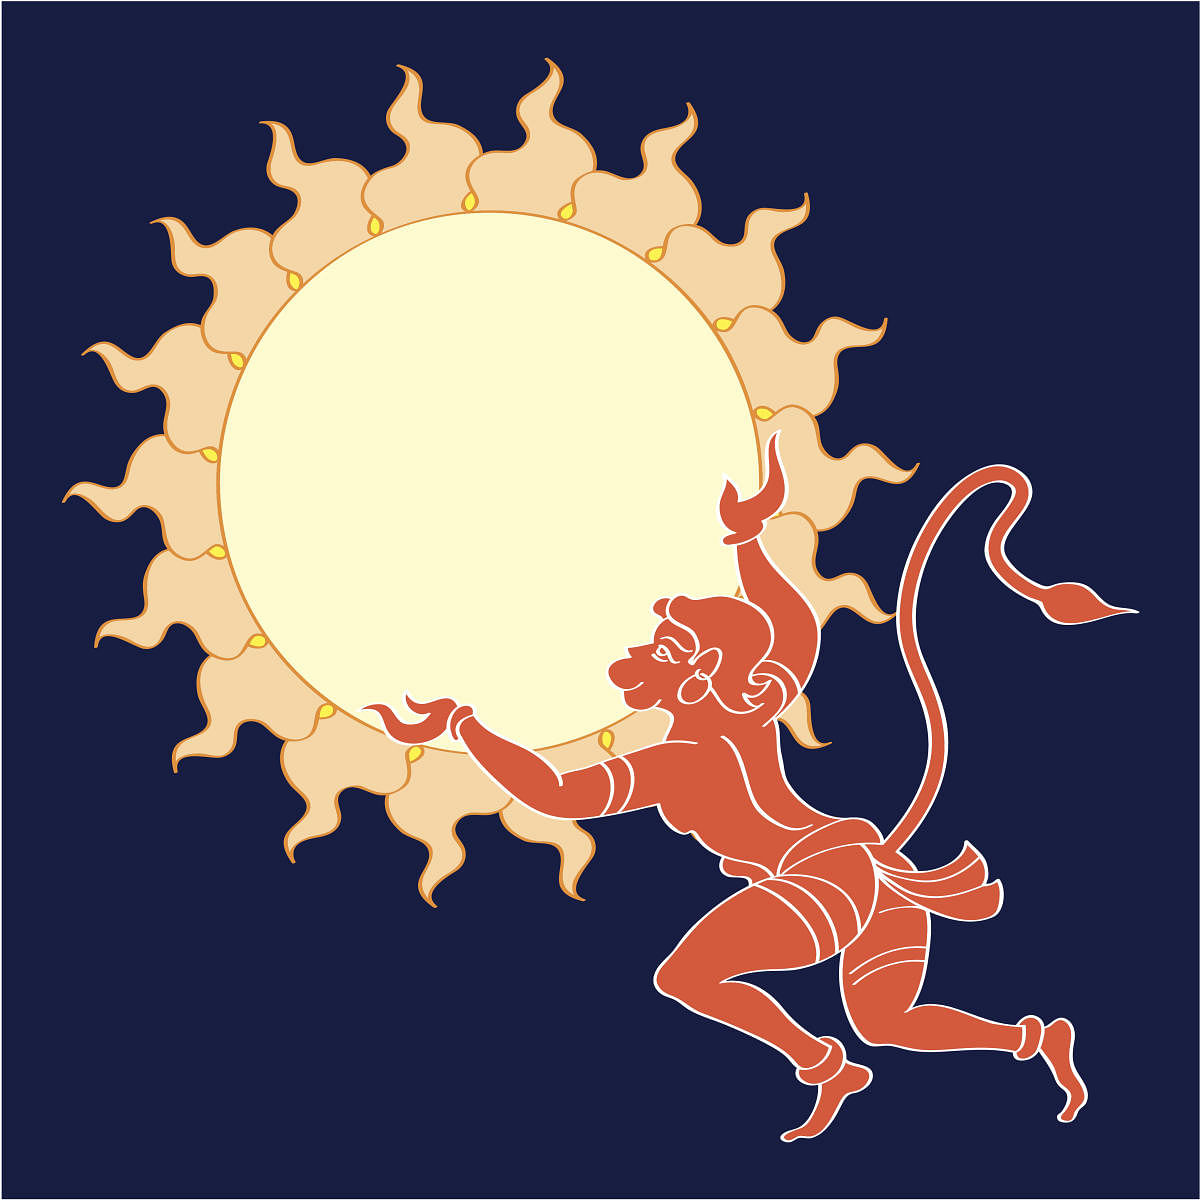 Sun God Surya shared an endearing relationship with his pupil Hanuman